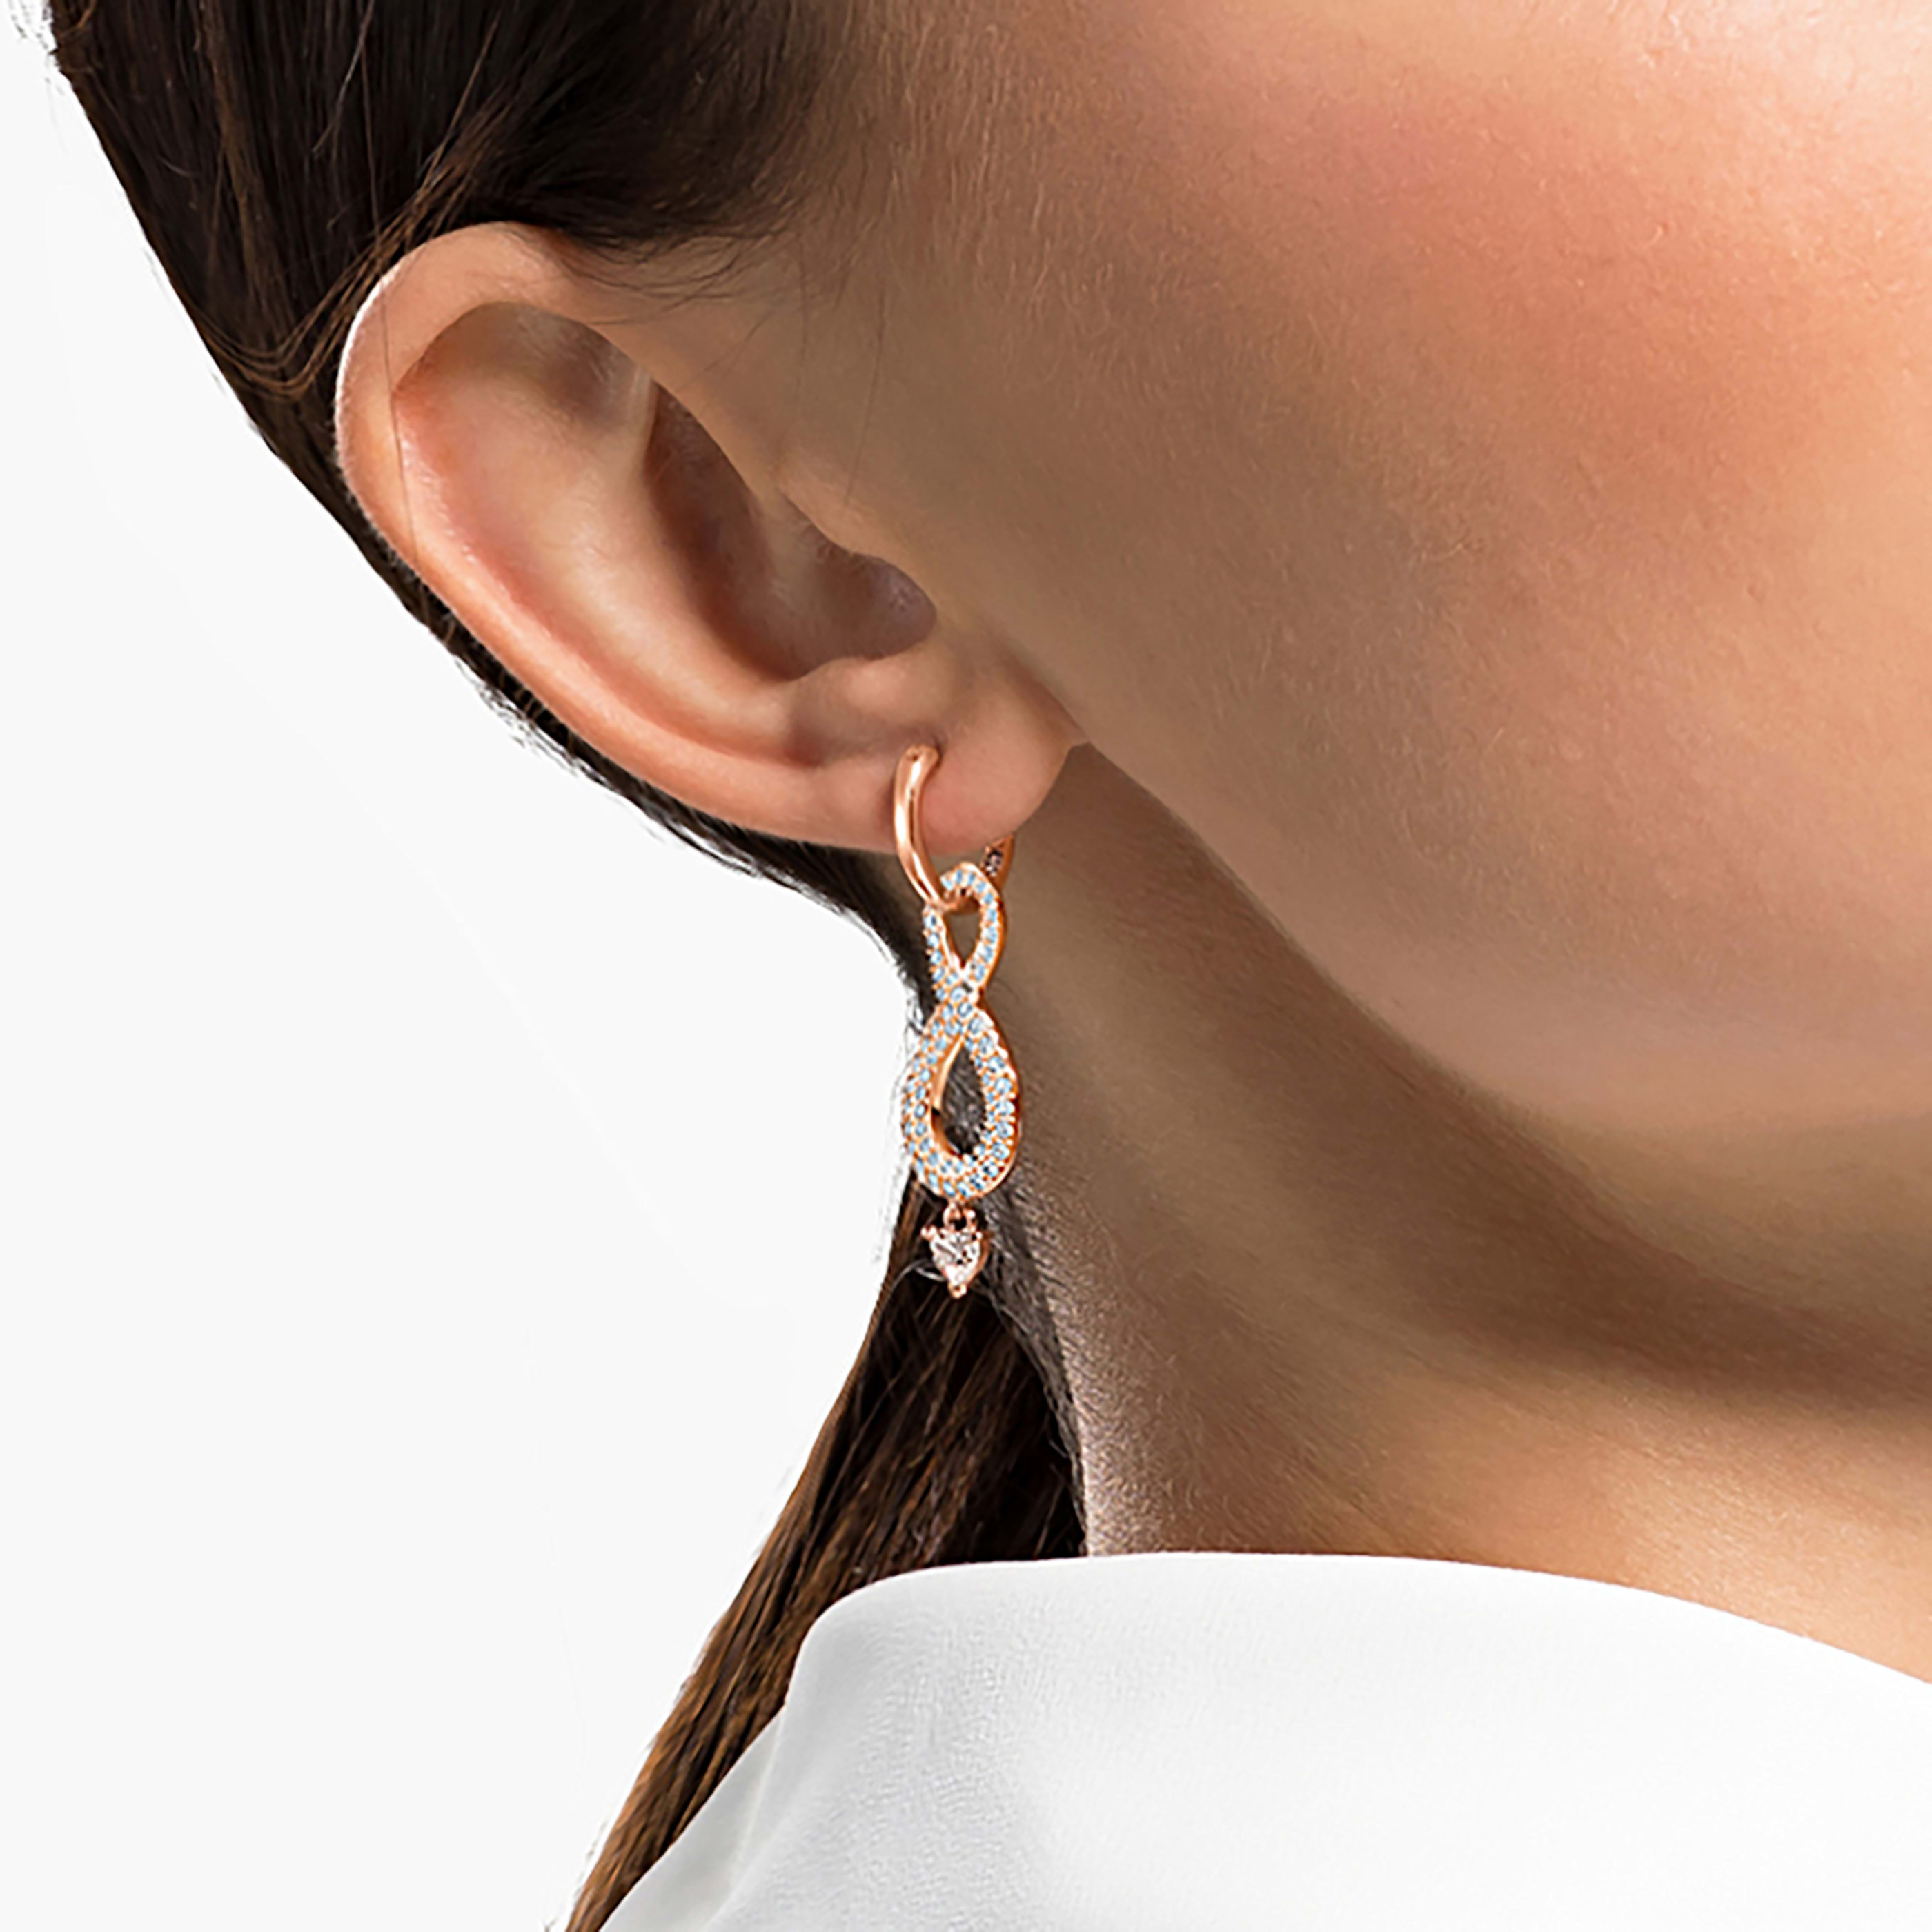 Swarovski Infinity Pierced Earrings, White, Rose-gold tone plated - Swarovski, 5512625